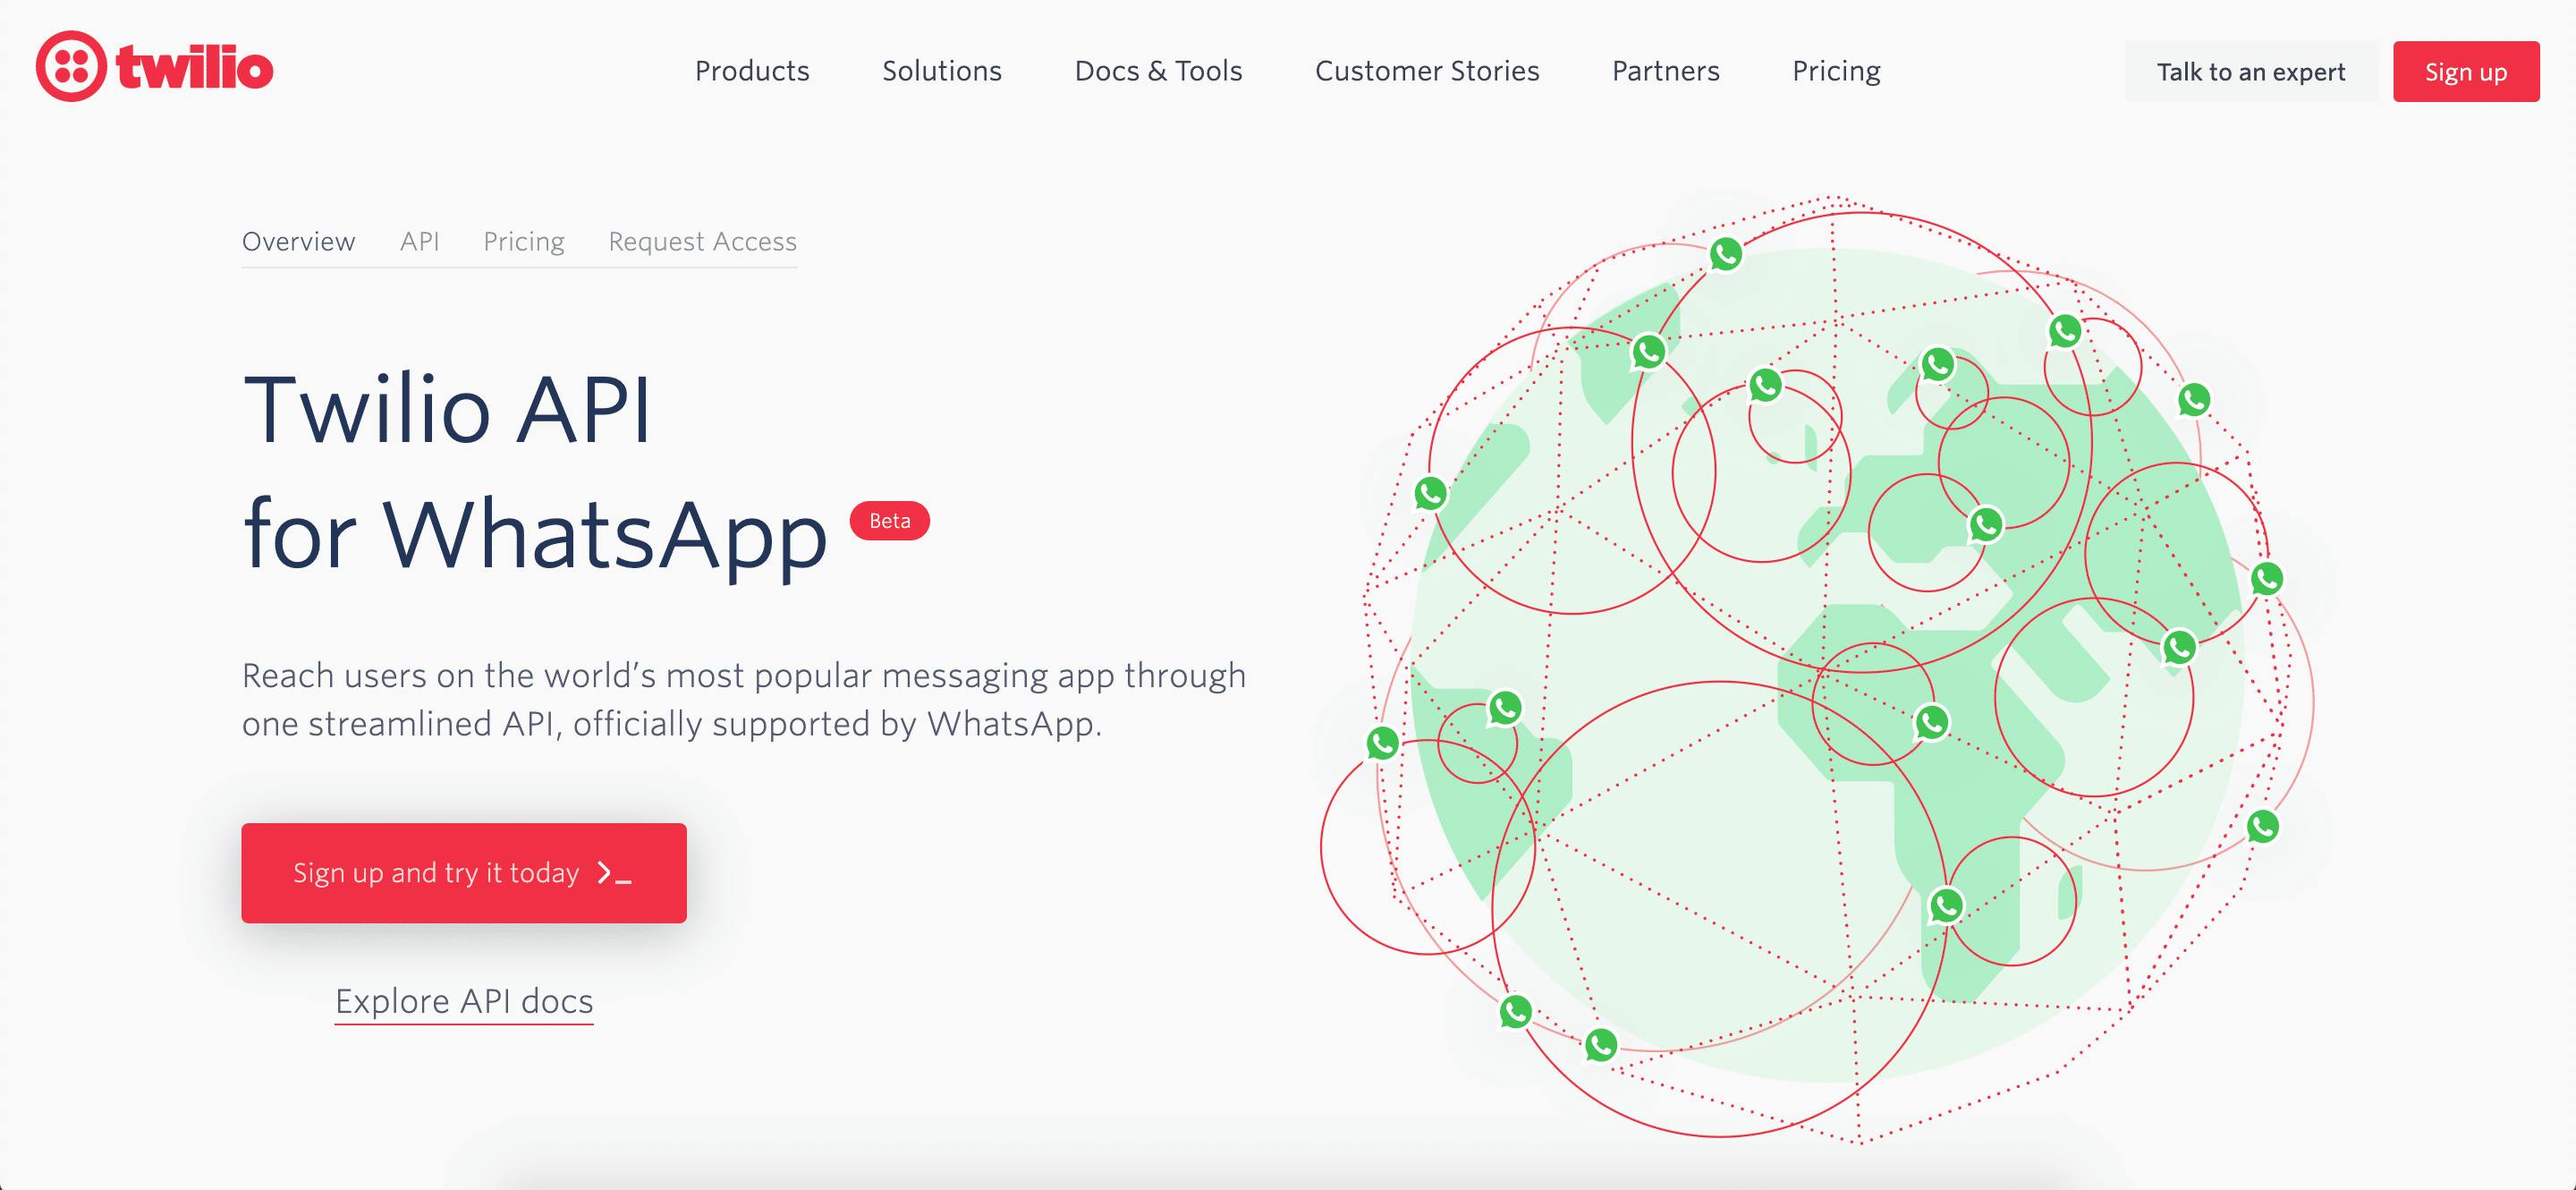 Twilio API for WhatsApp